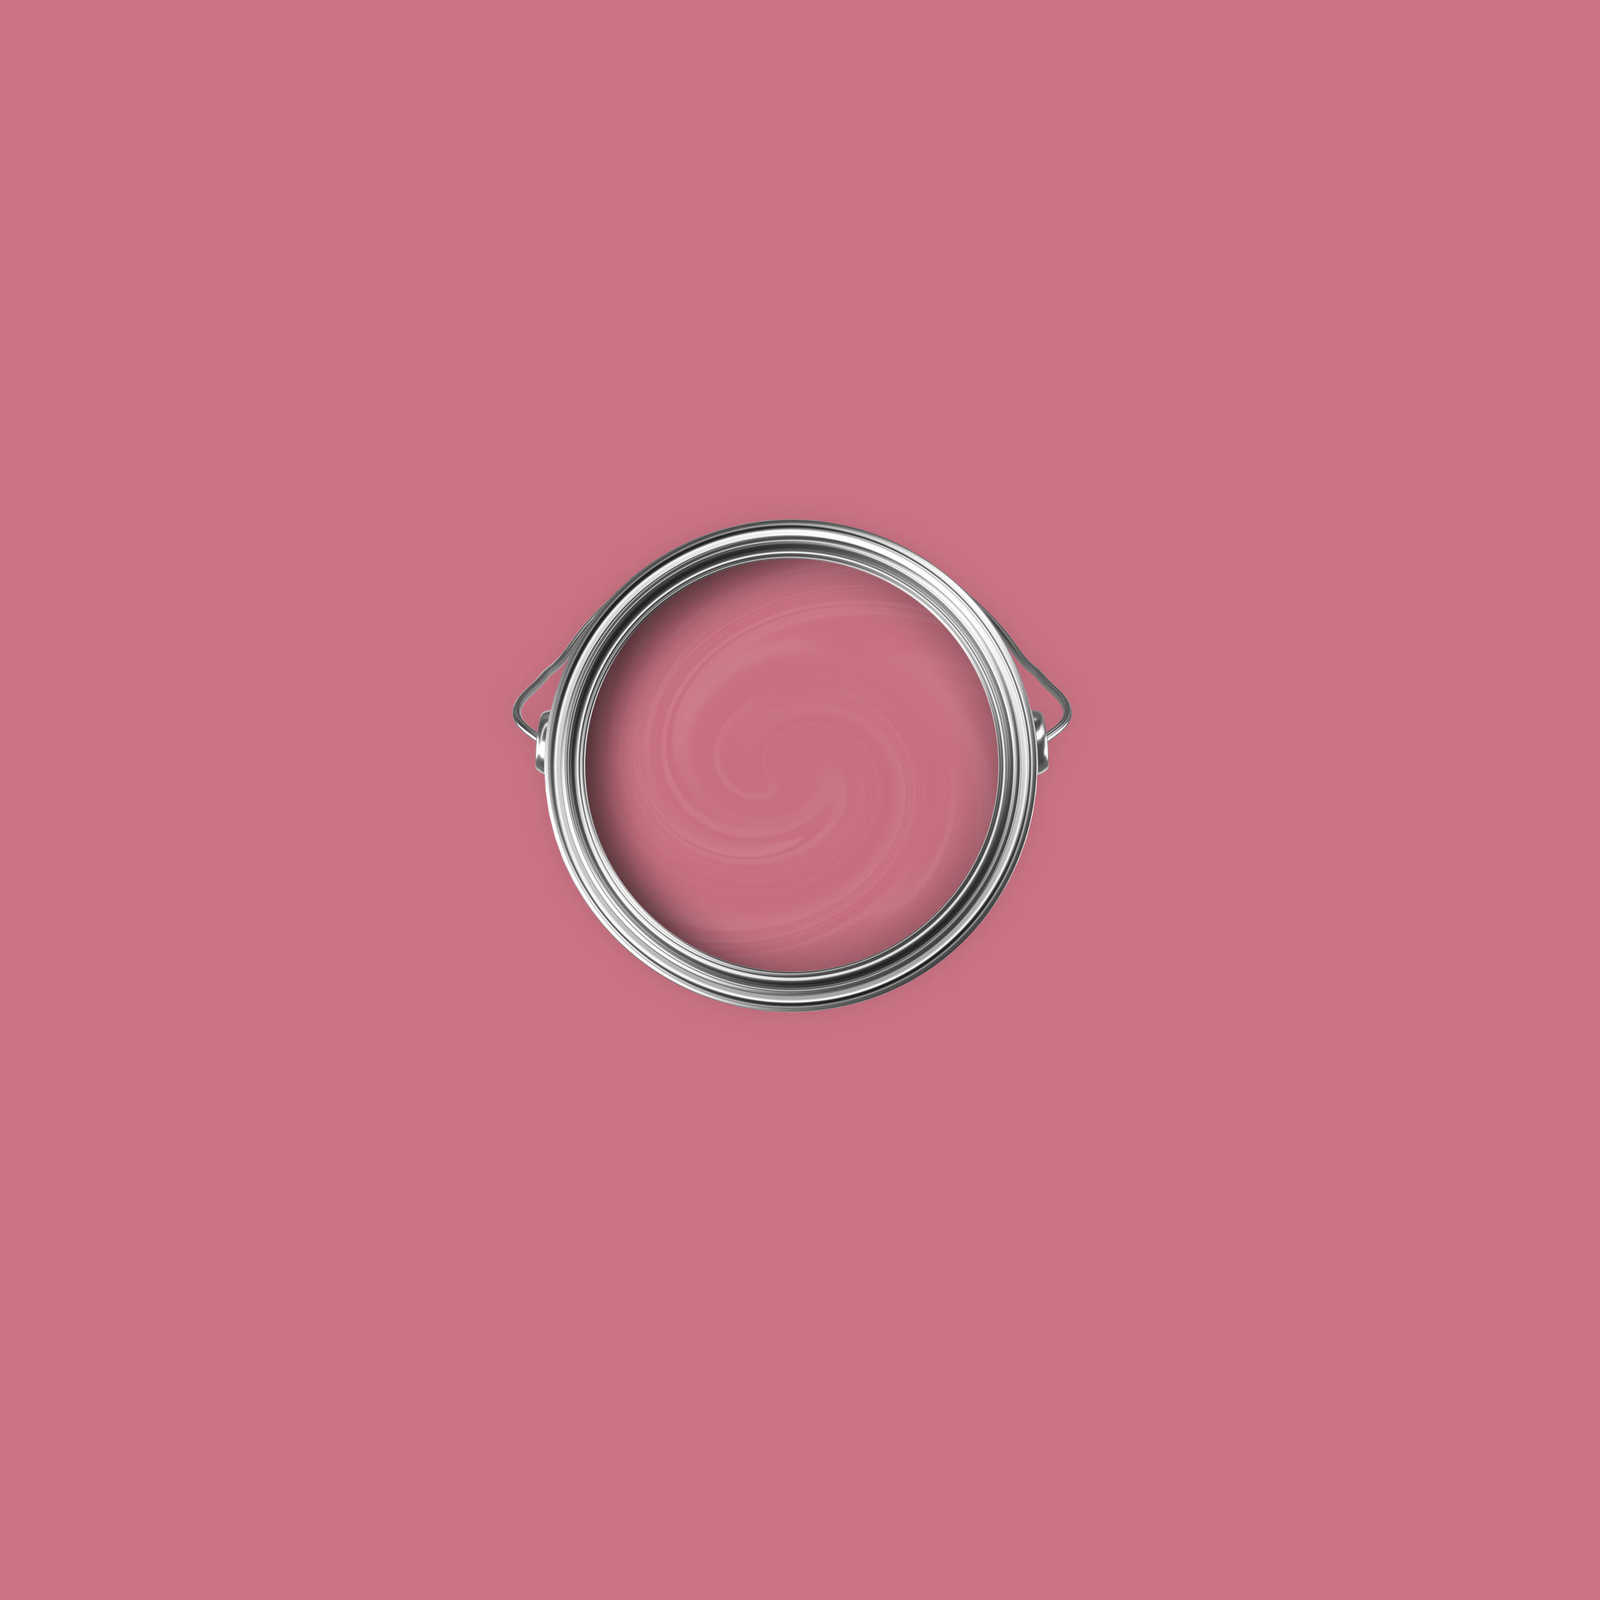             Premium Muurverf Refreshing Dark Pink »Blooming Blossom« NW1018 – 1 liter
        